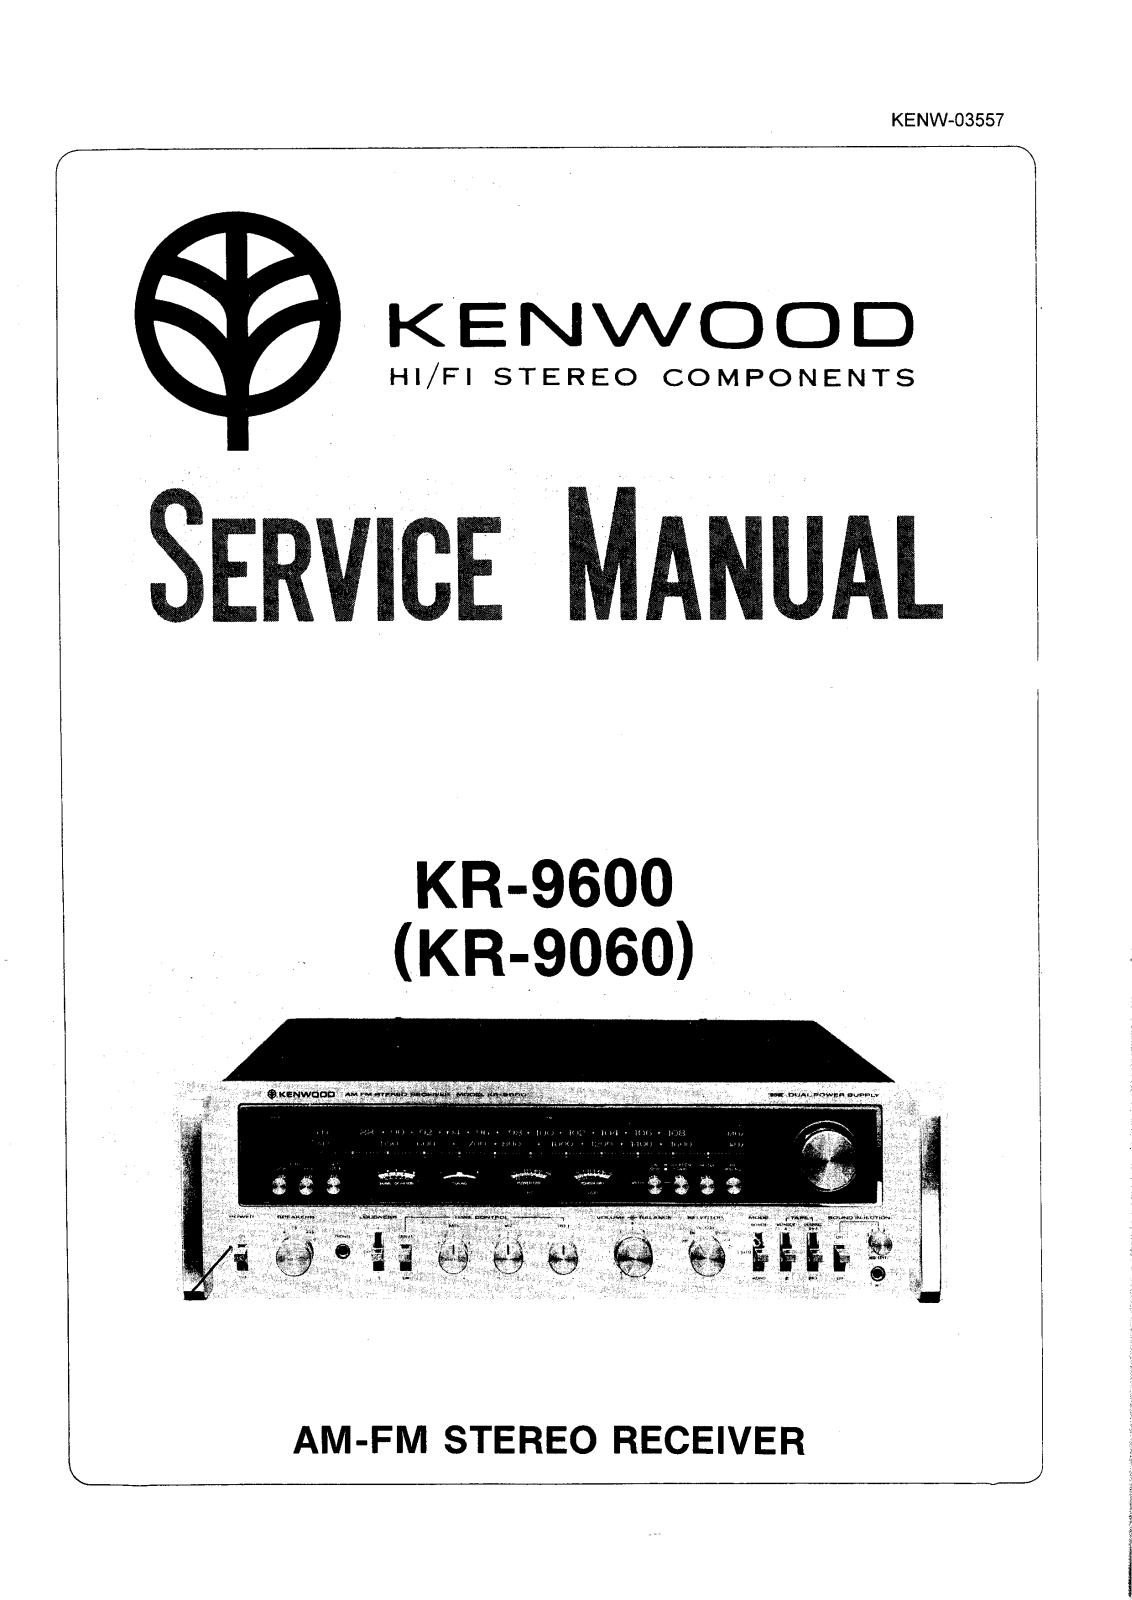 Kenwood KR-9060, KR-9600 Service manual